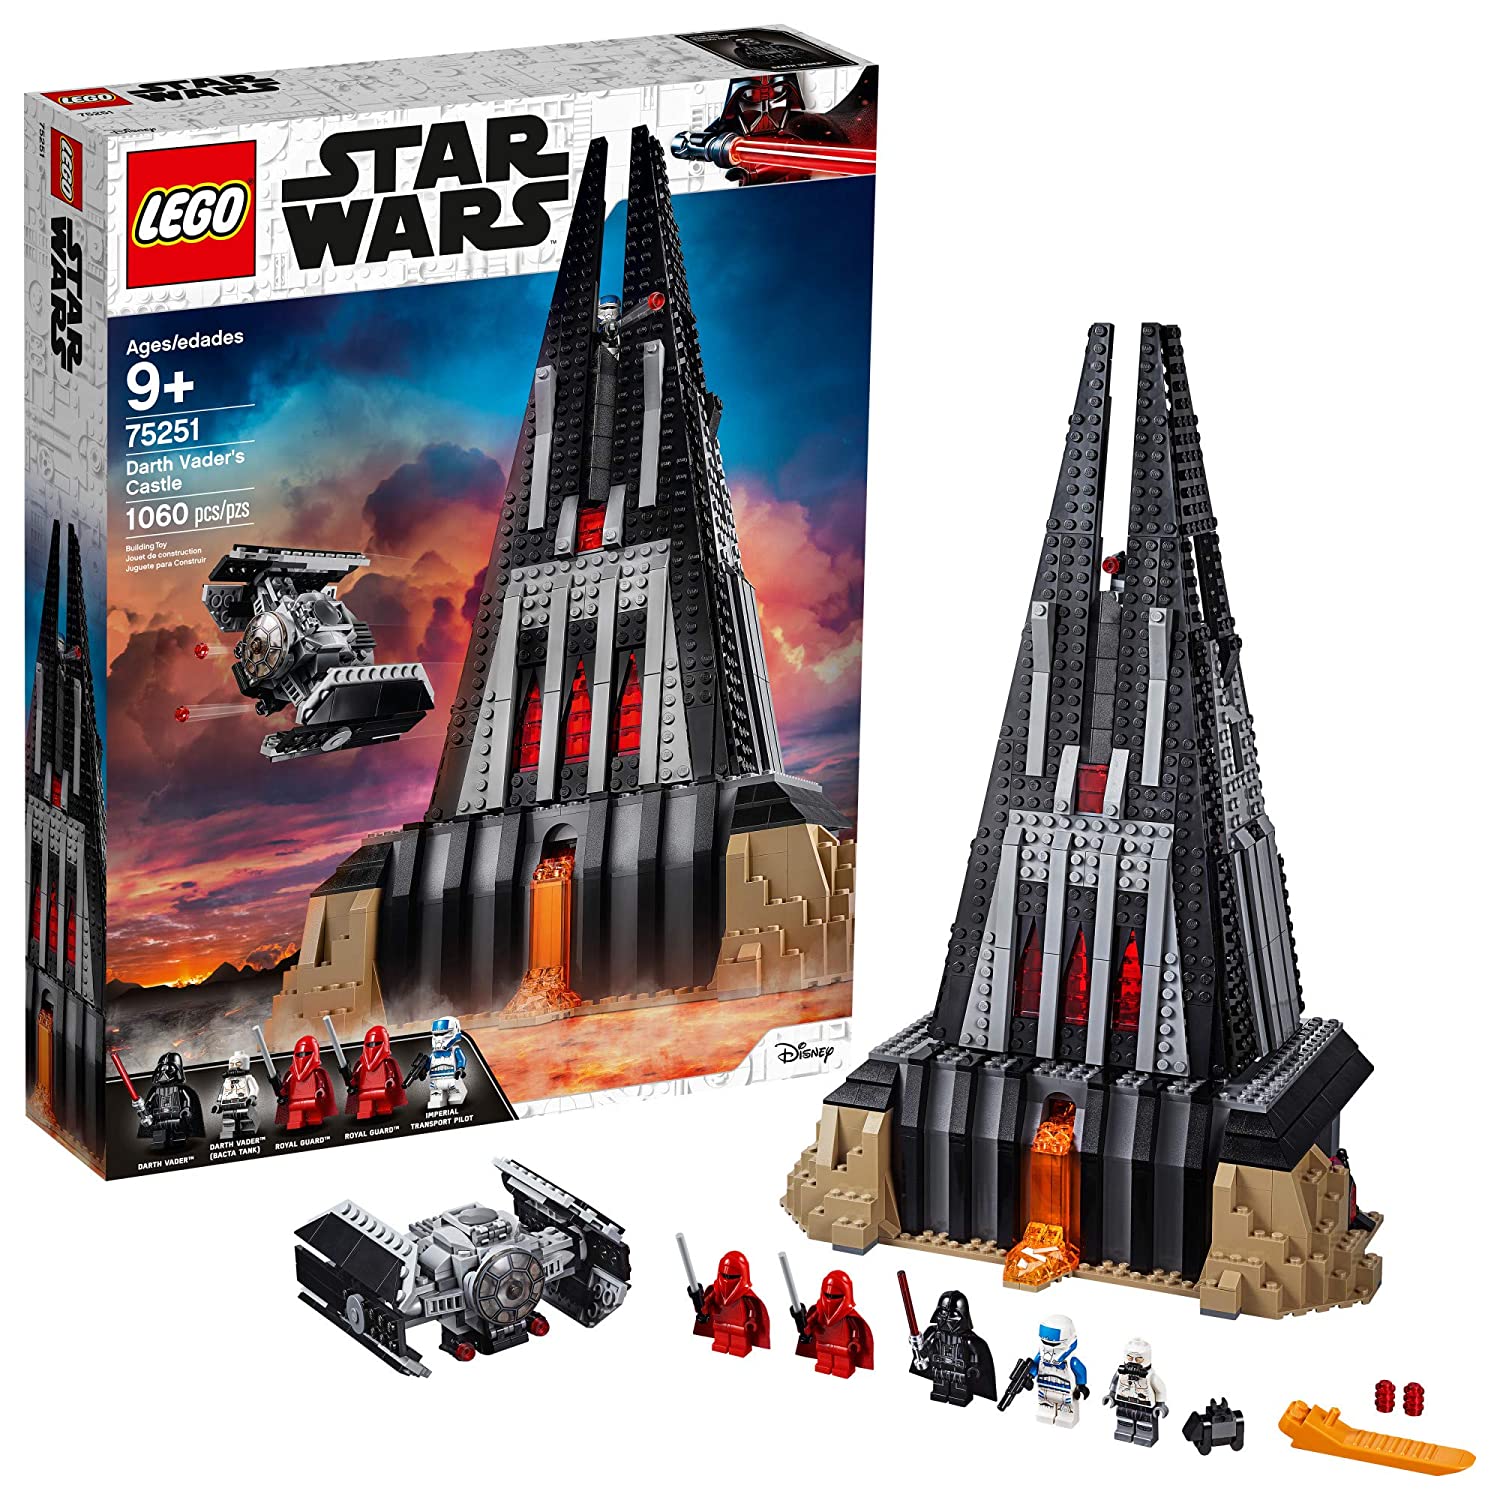 LEGO Star Wars Darth Vader’s Castle 75251 Building Kit (1060 Pieces)